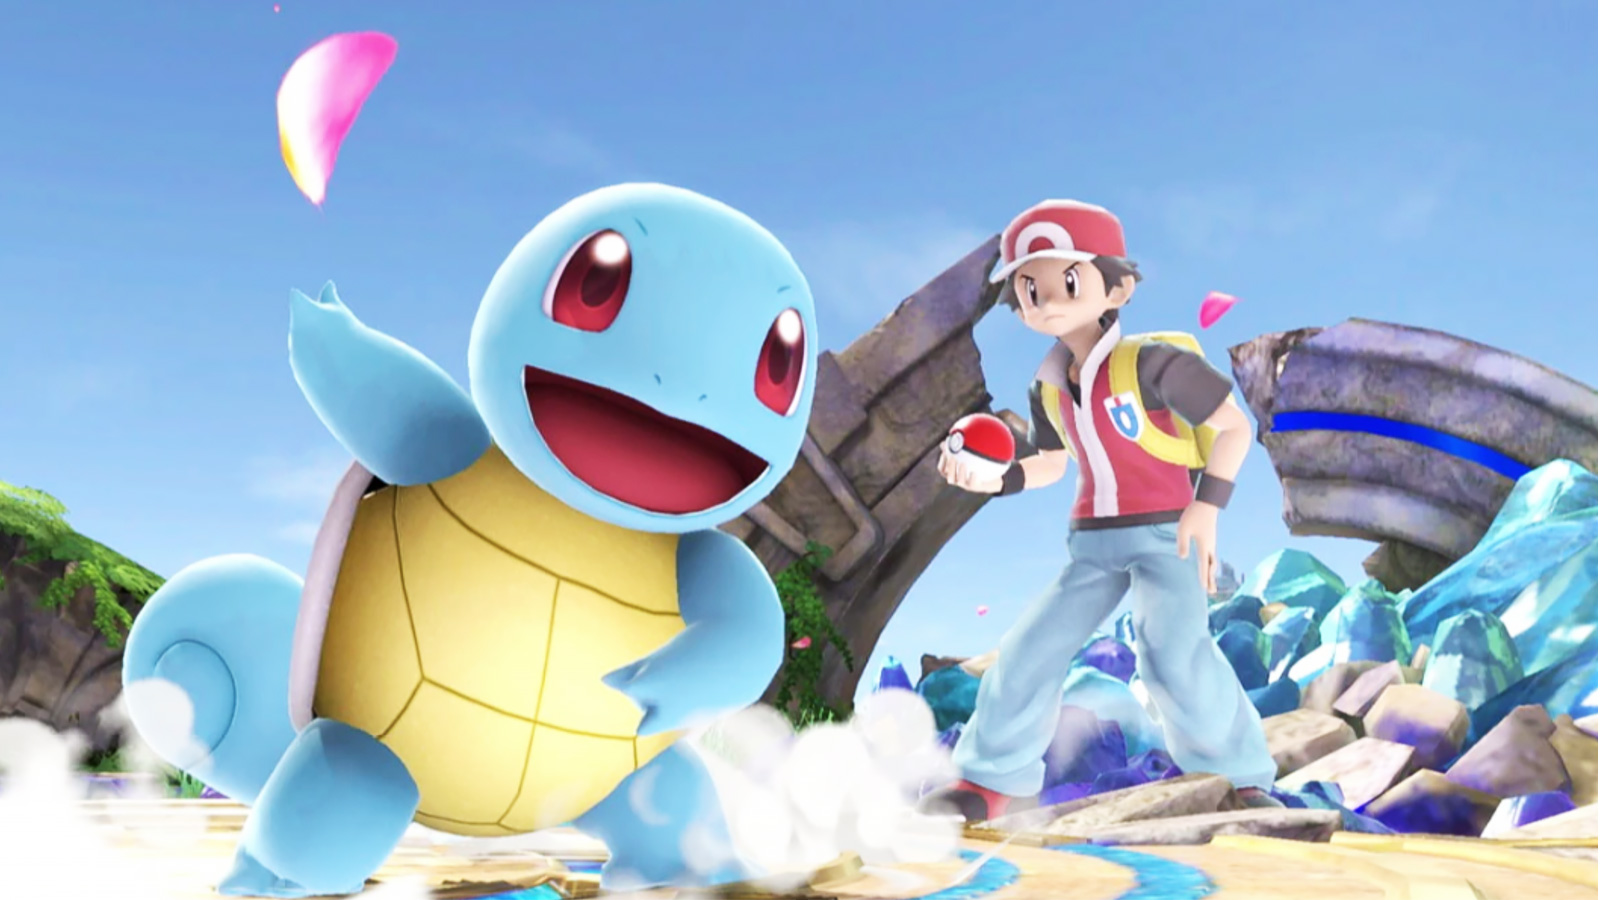 Event] Pokémon Sword and Pokémon Shield! - Super Smash Bros. Ultimate